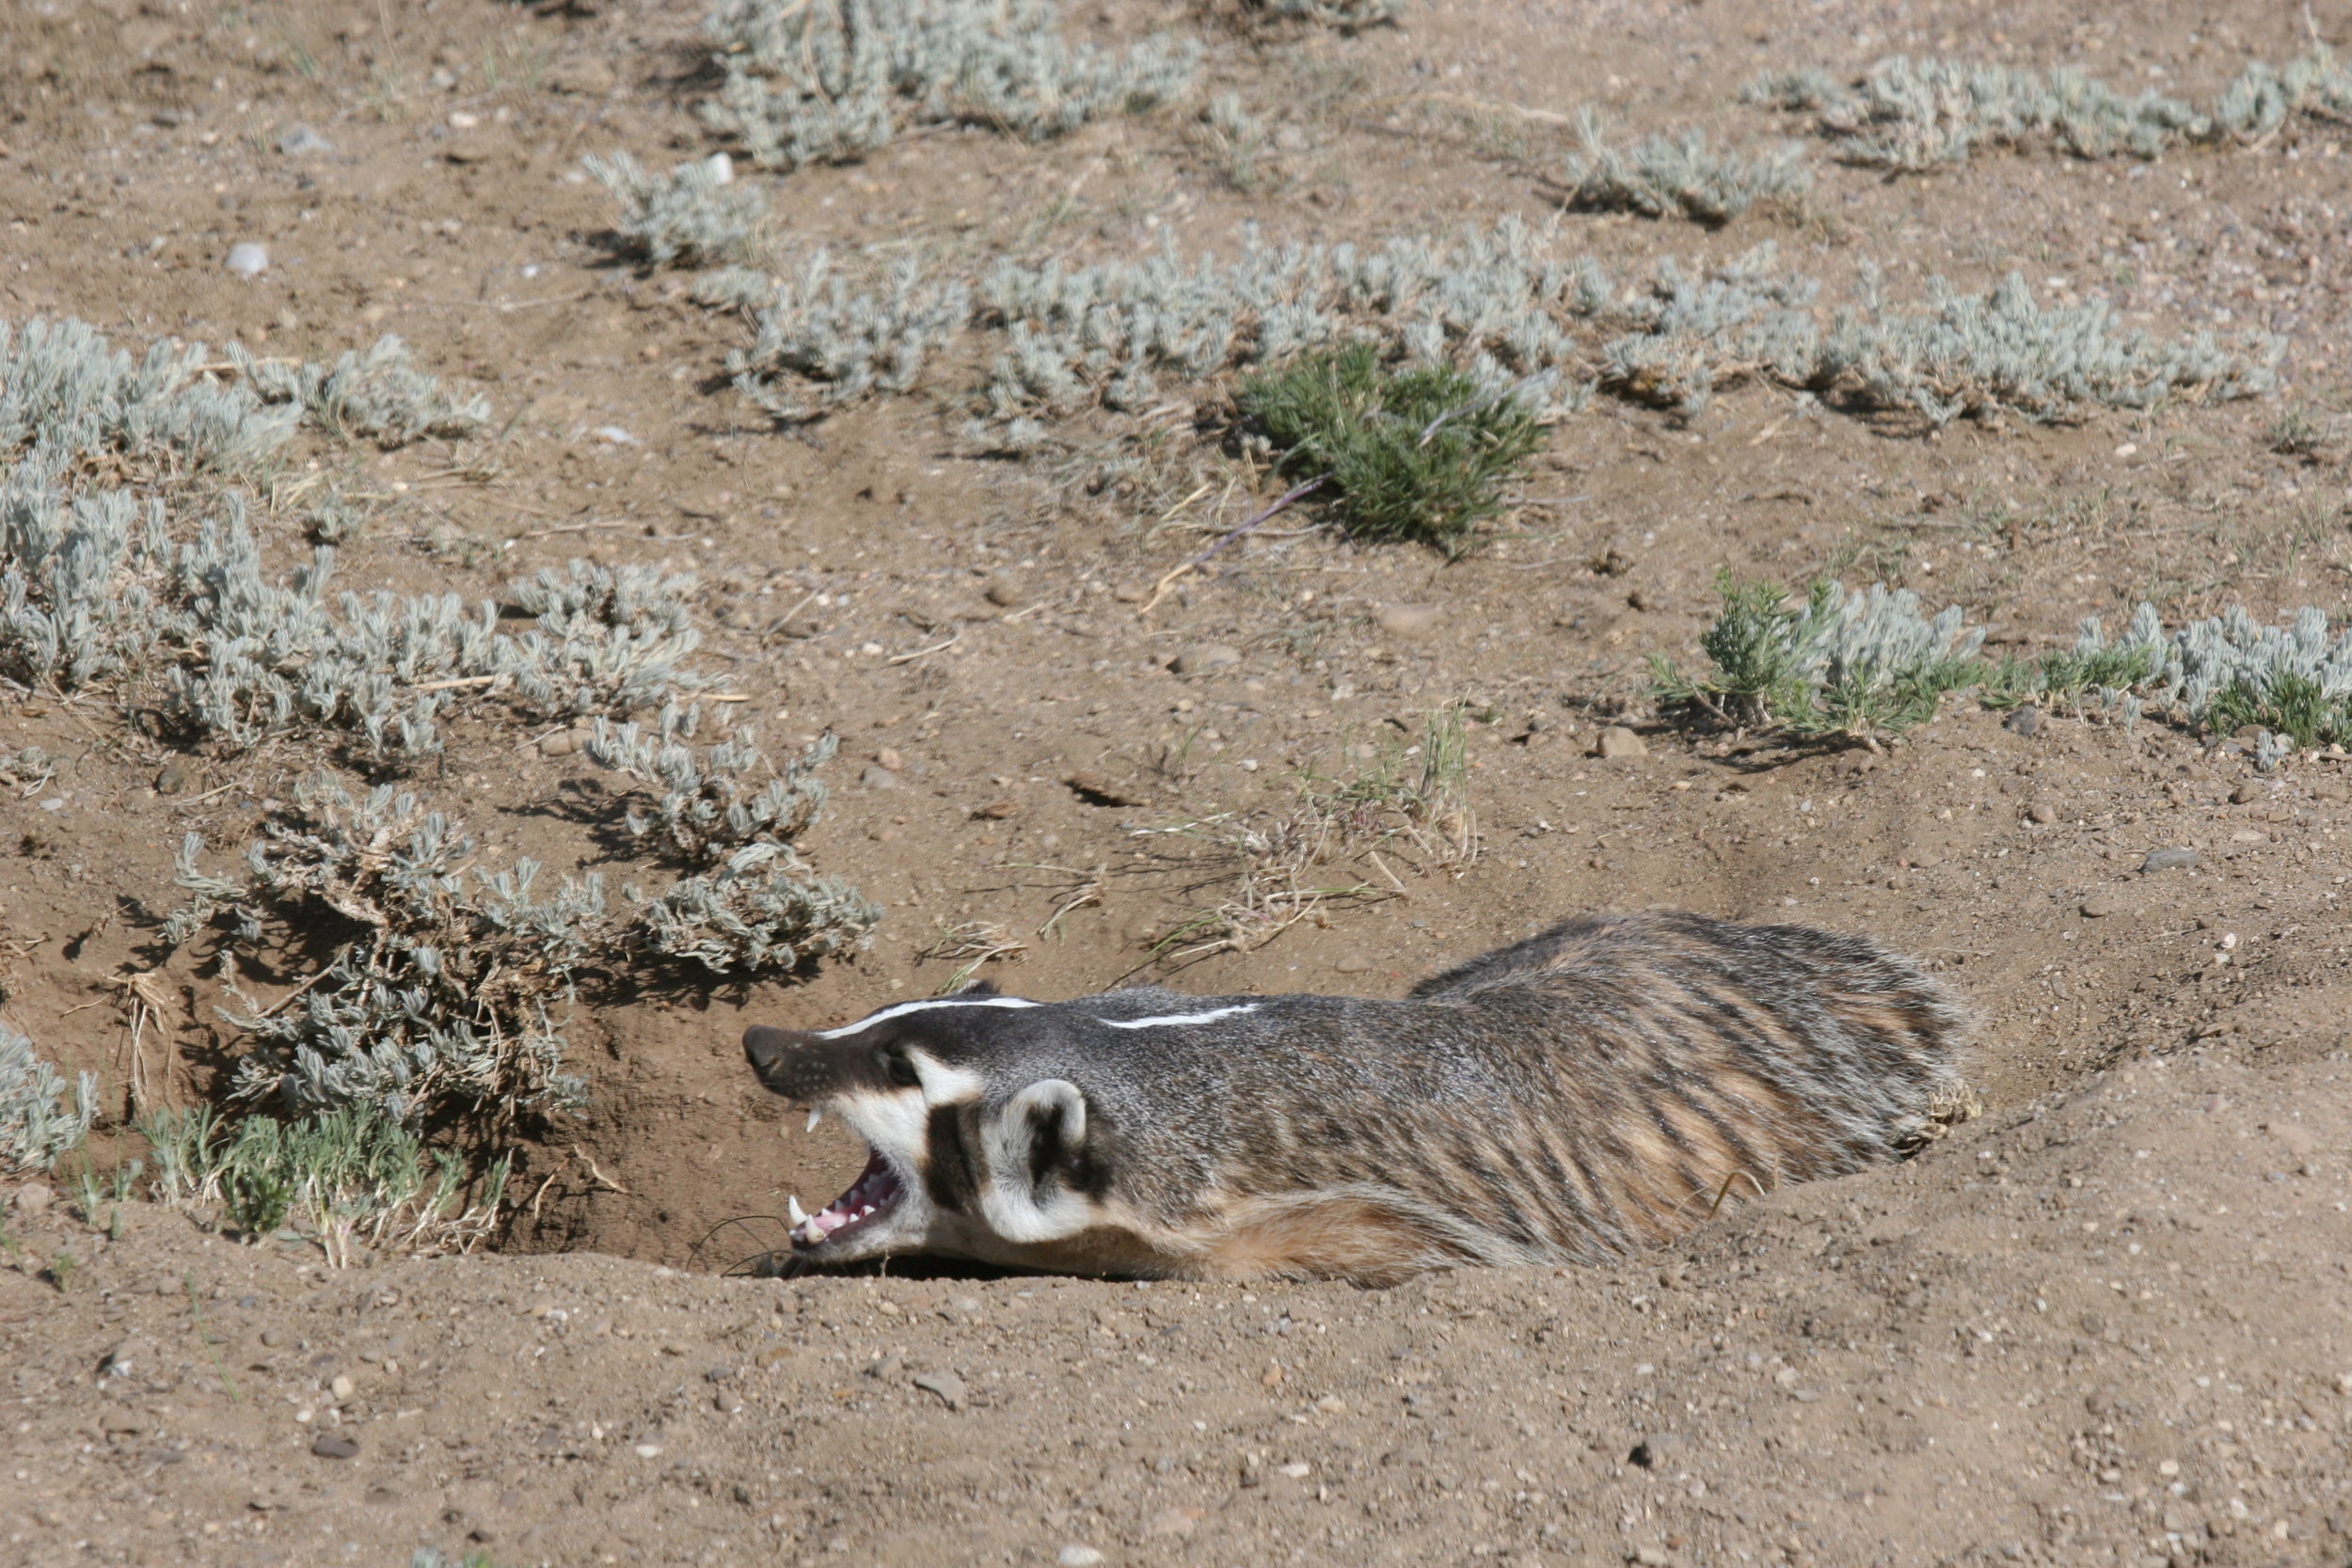  As a carnivore, badgers have long, sharp canines for grabbing prey.  ©John Hoogland 2012  